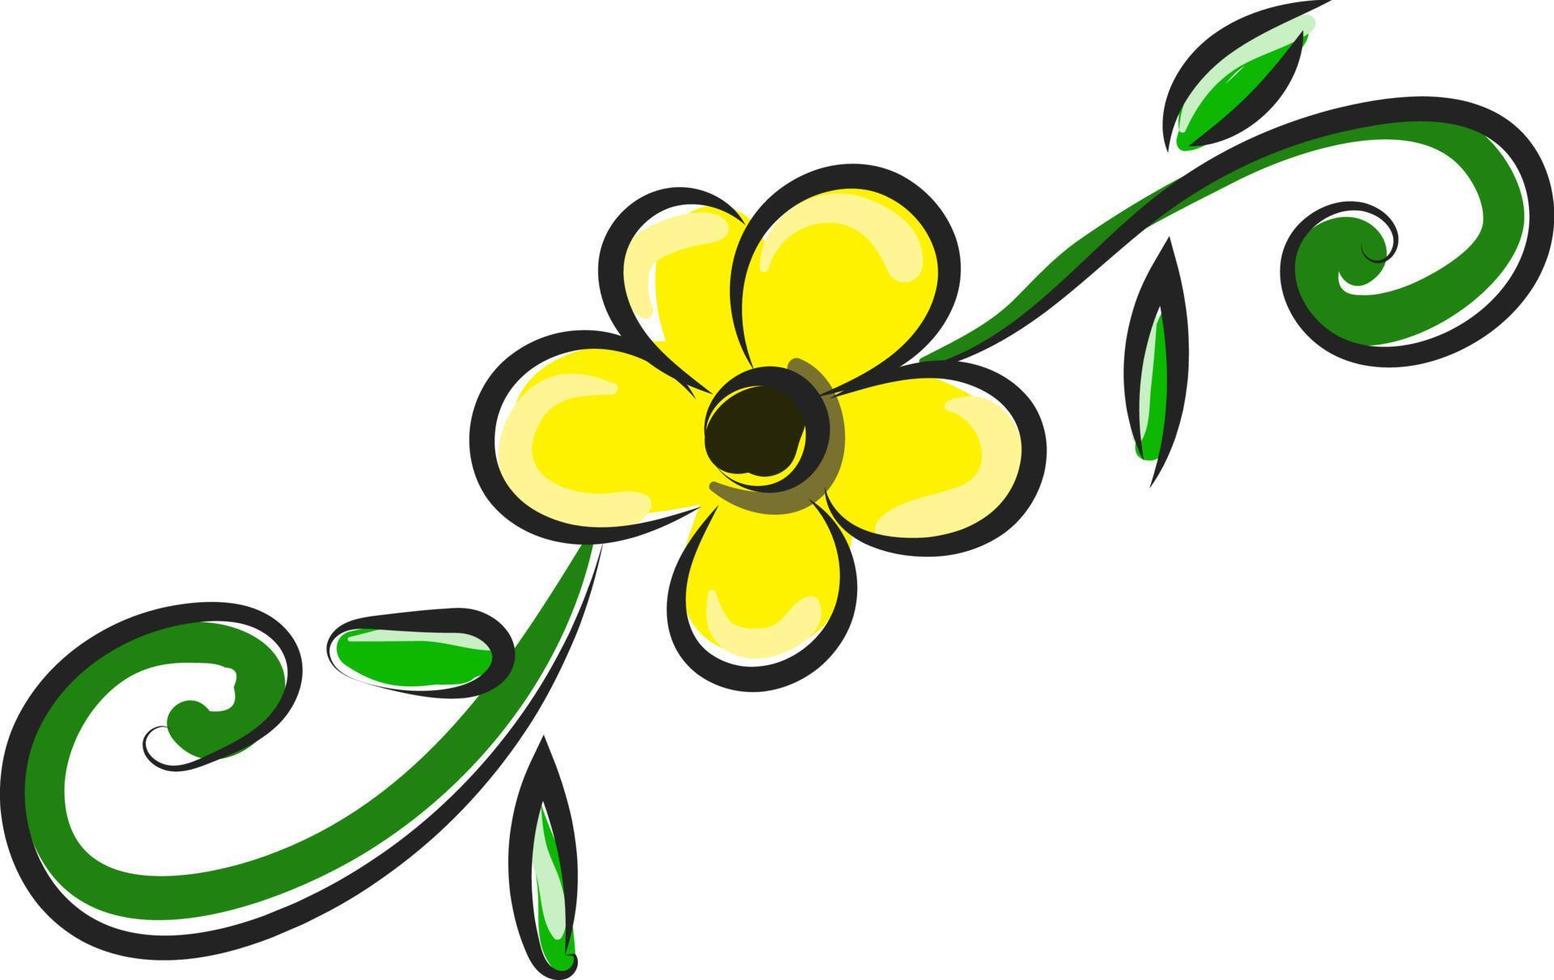 Yellow flower, illustration, vector on white background.